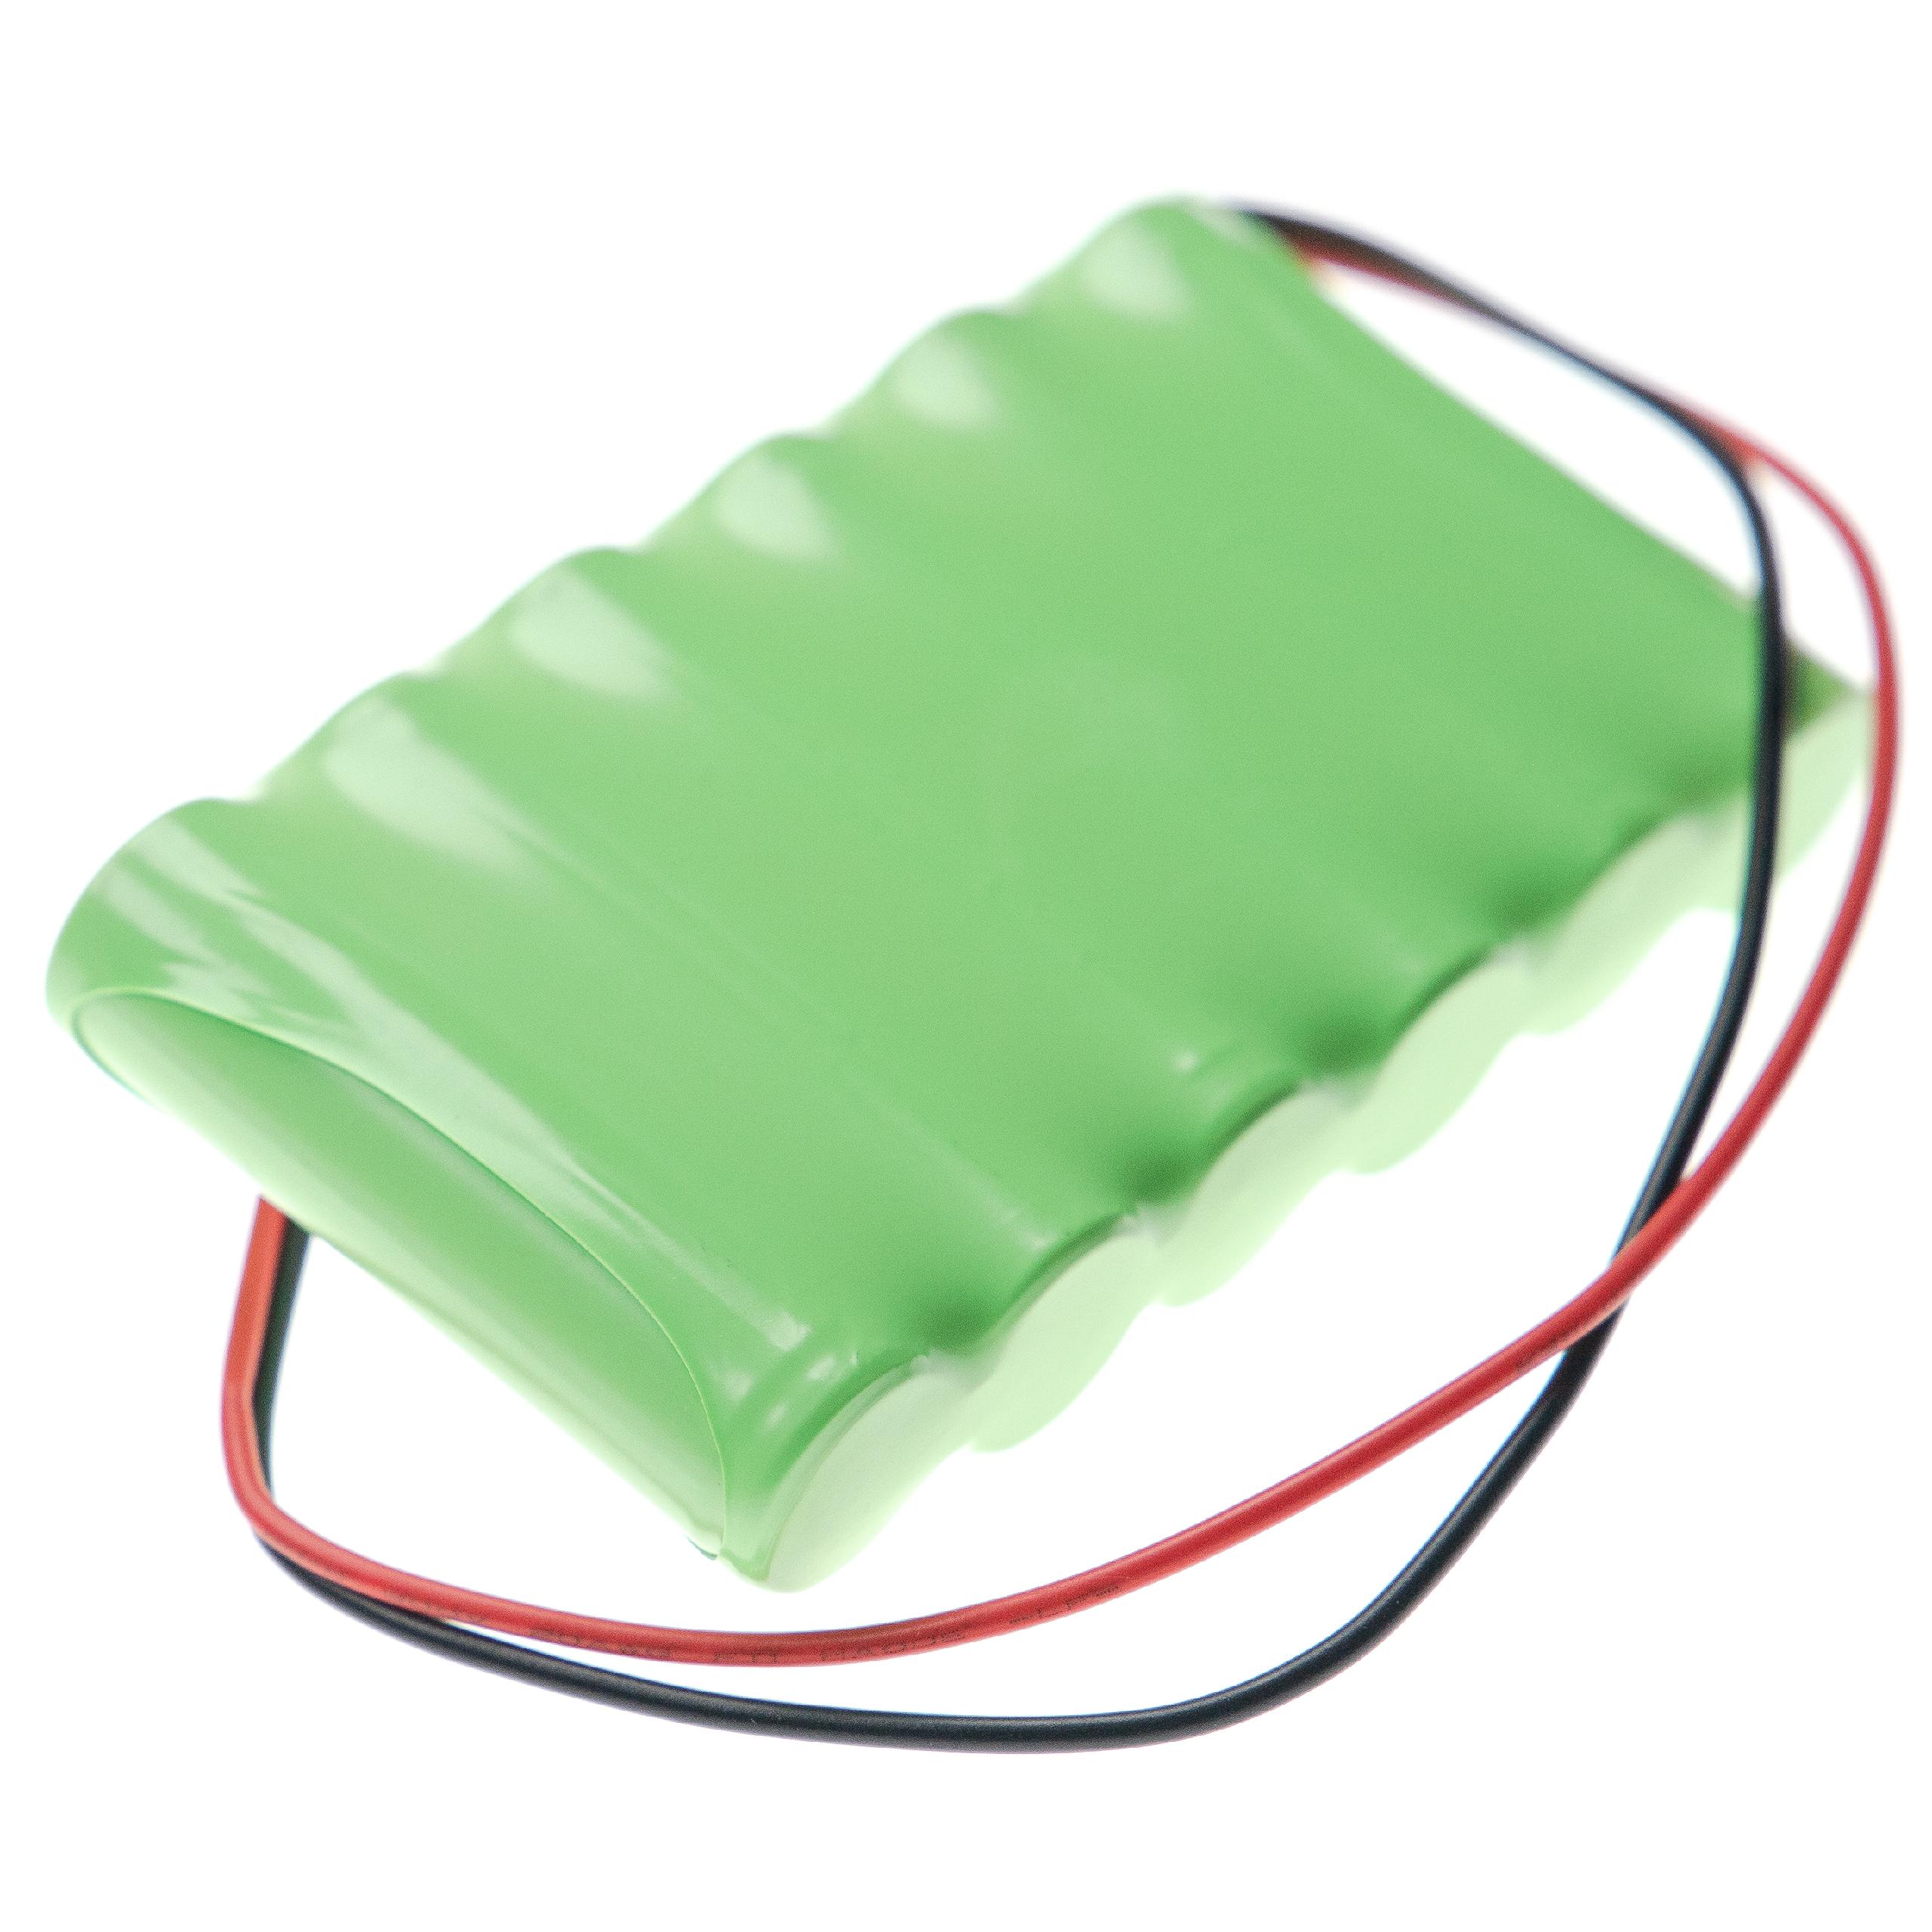 Alarm System Battery Replacement for Visonic BAT301179, 103-303689, 103-301179 - 1500mAh 7.2V NiMH